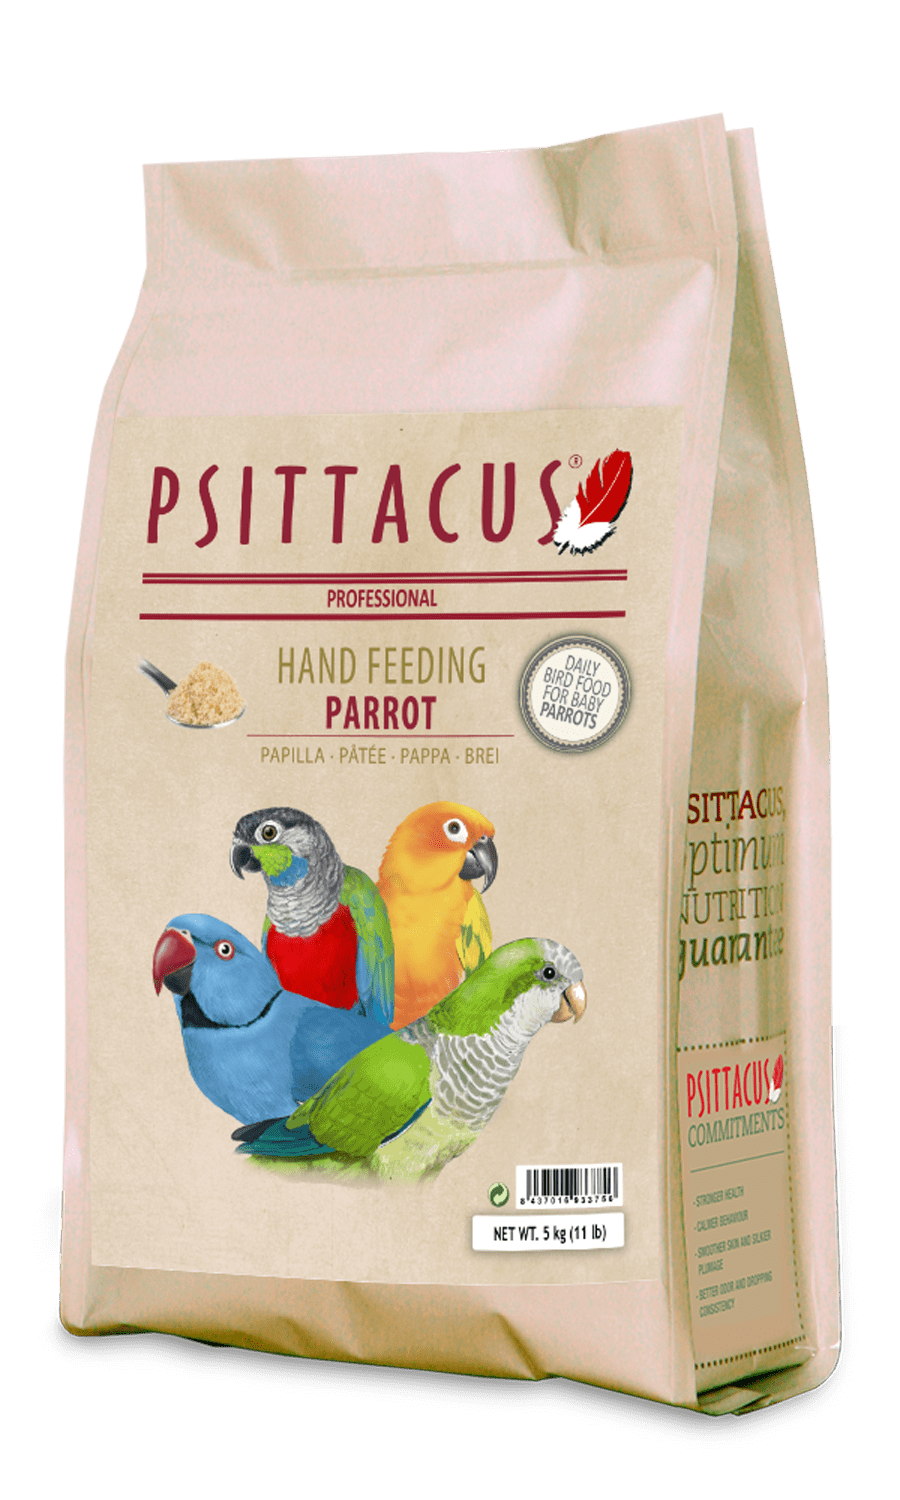 Psittacus Parrot Hand Feeding 5kg